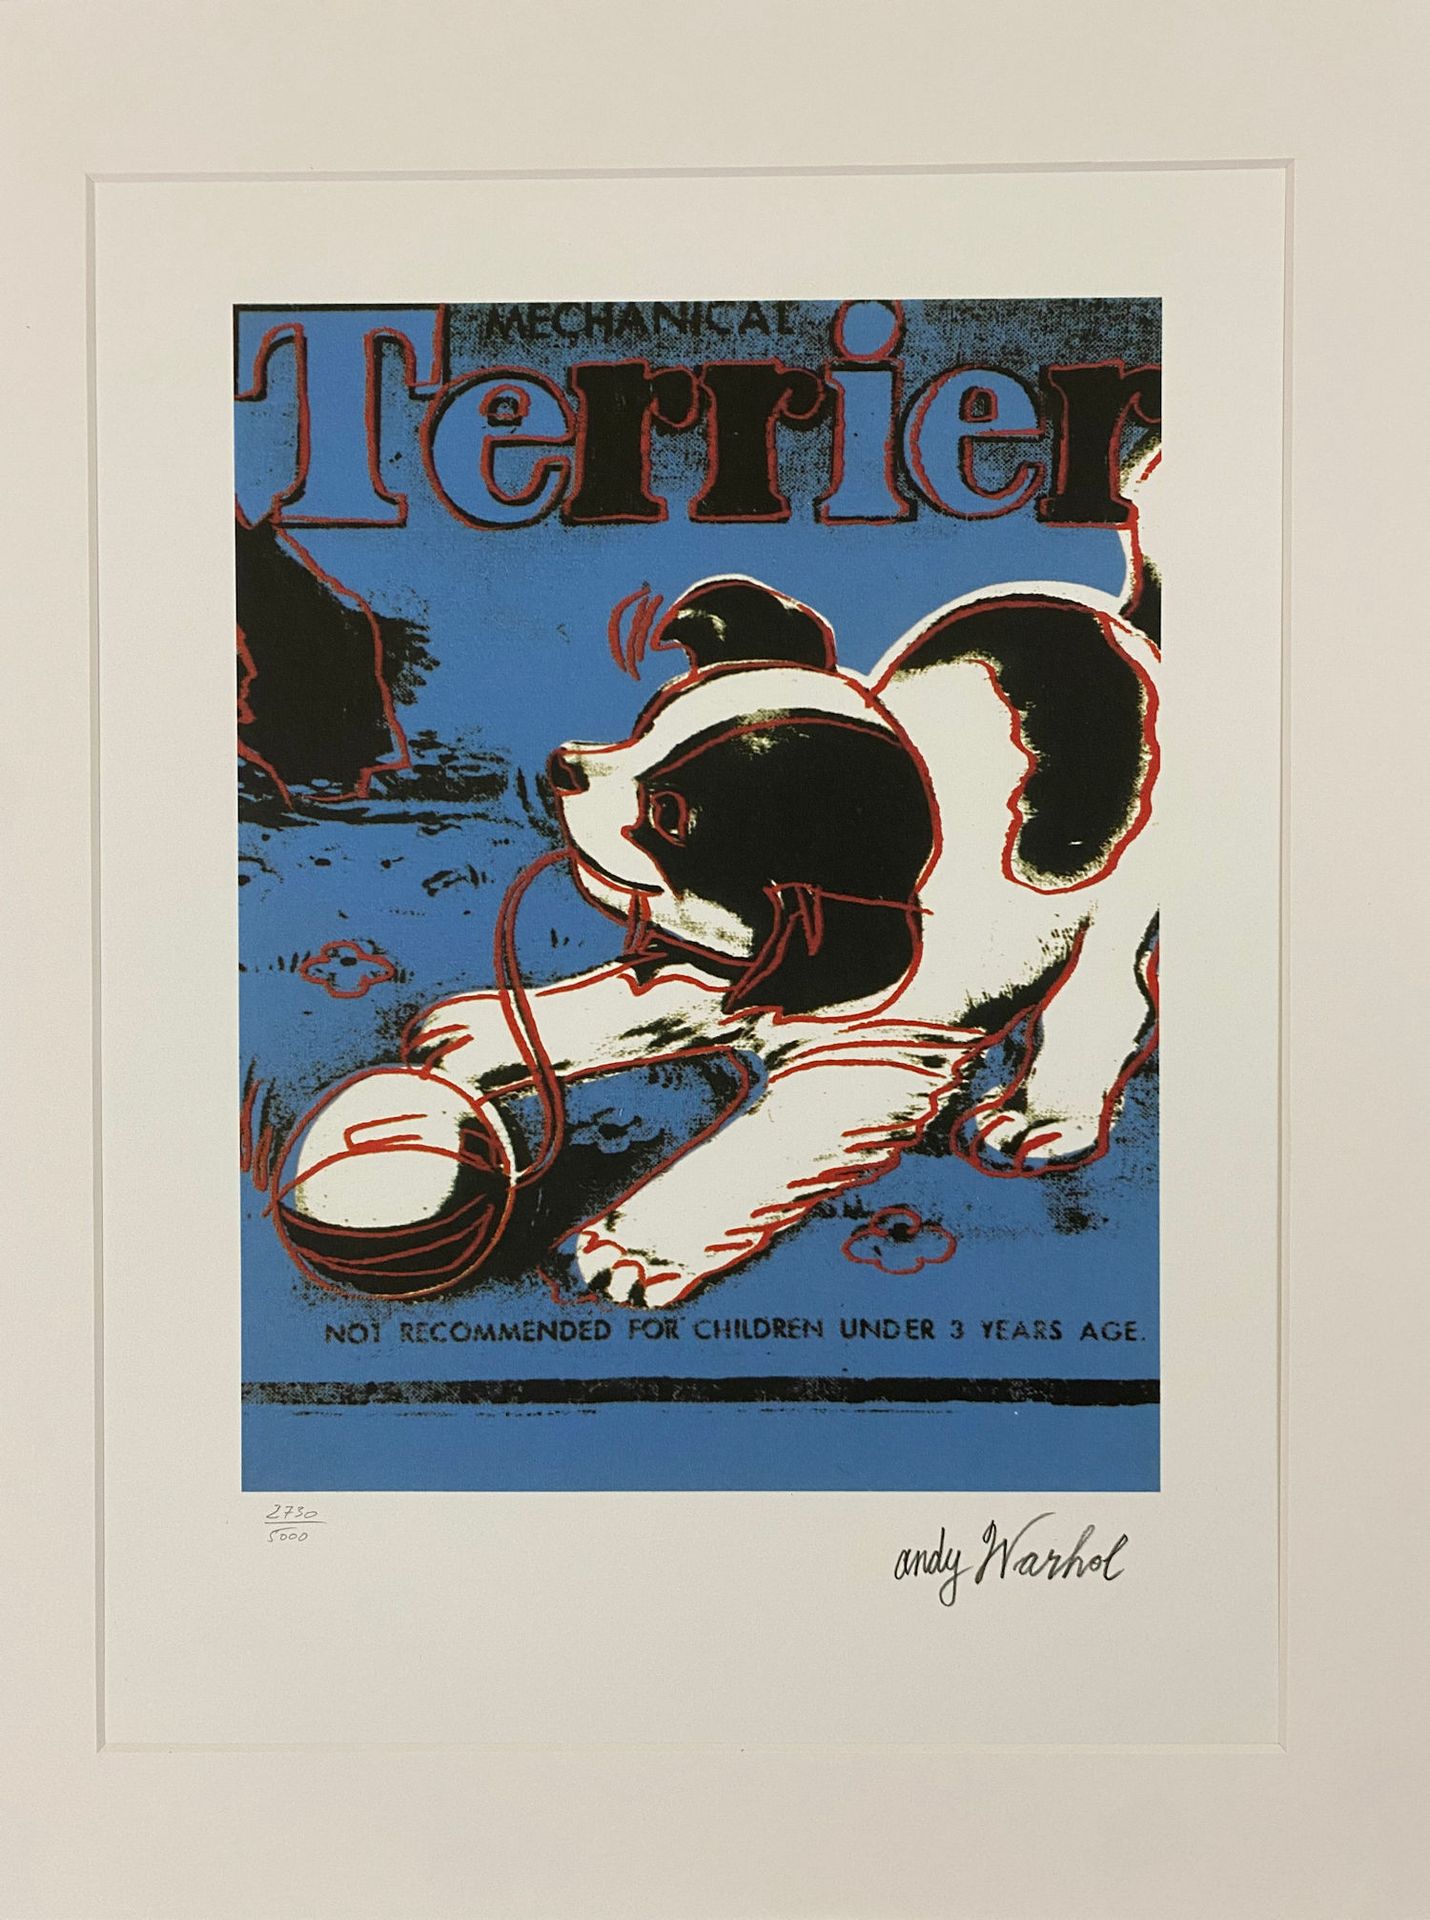 ANDY WARHOL 安迪-沃霍尔（后）

蓝色梗犬

艺术家作品后的花岗石版画

版面上有签名，并有铅笔编号

限量发行5000册

背面有一个印章

纸张&hellip;